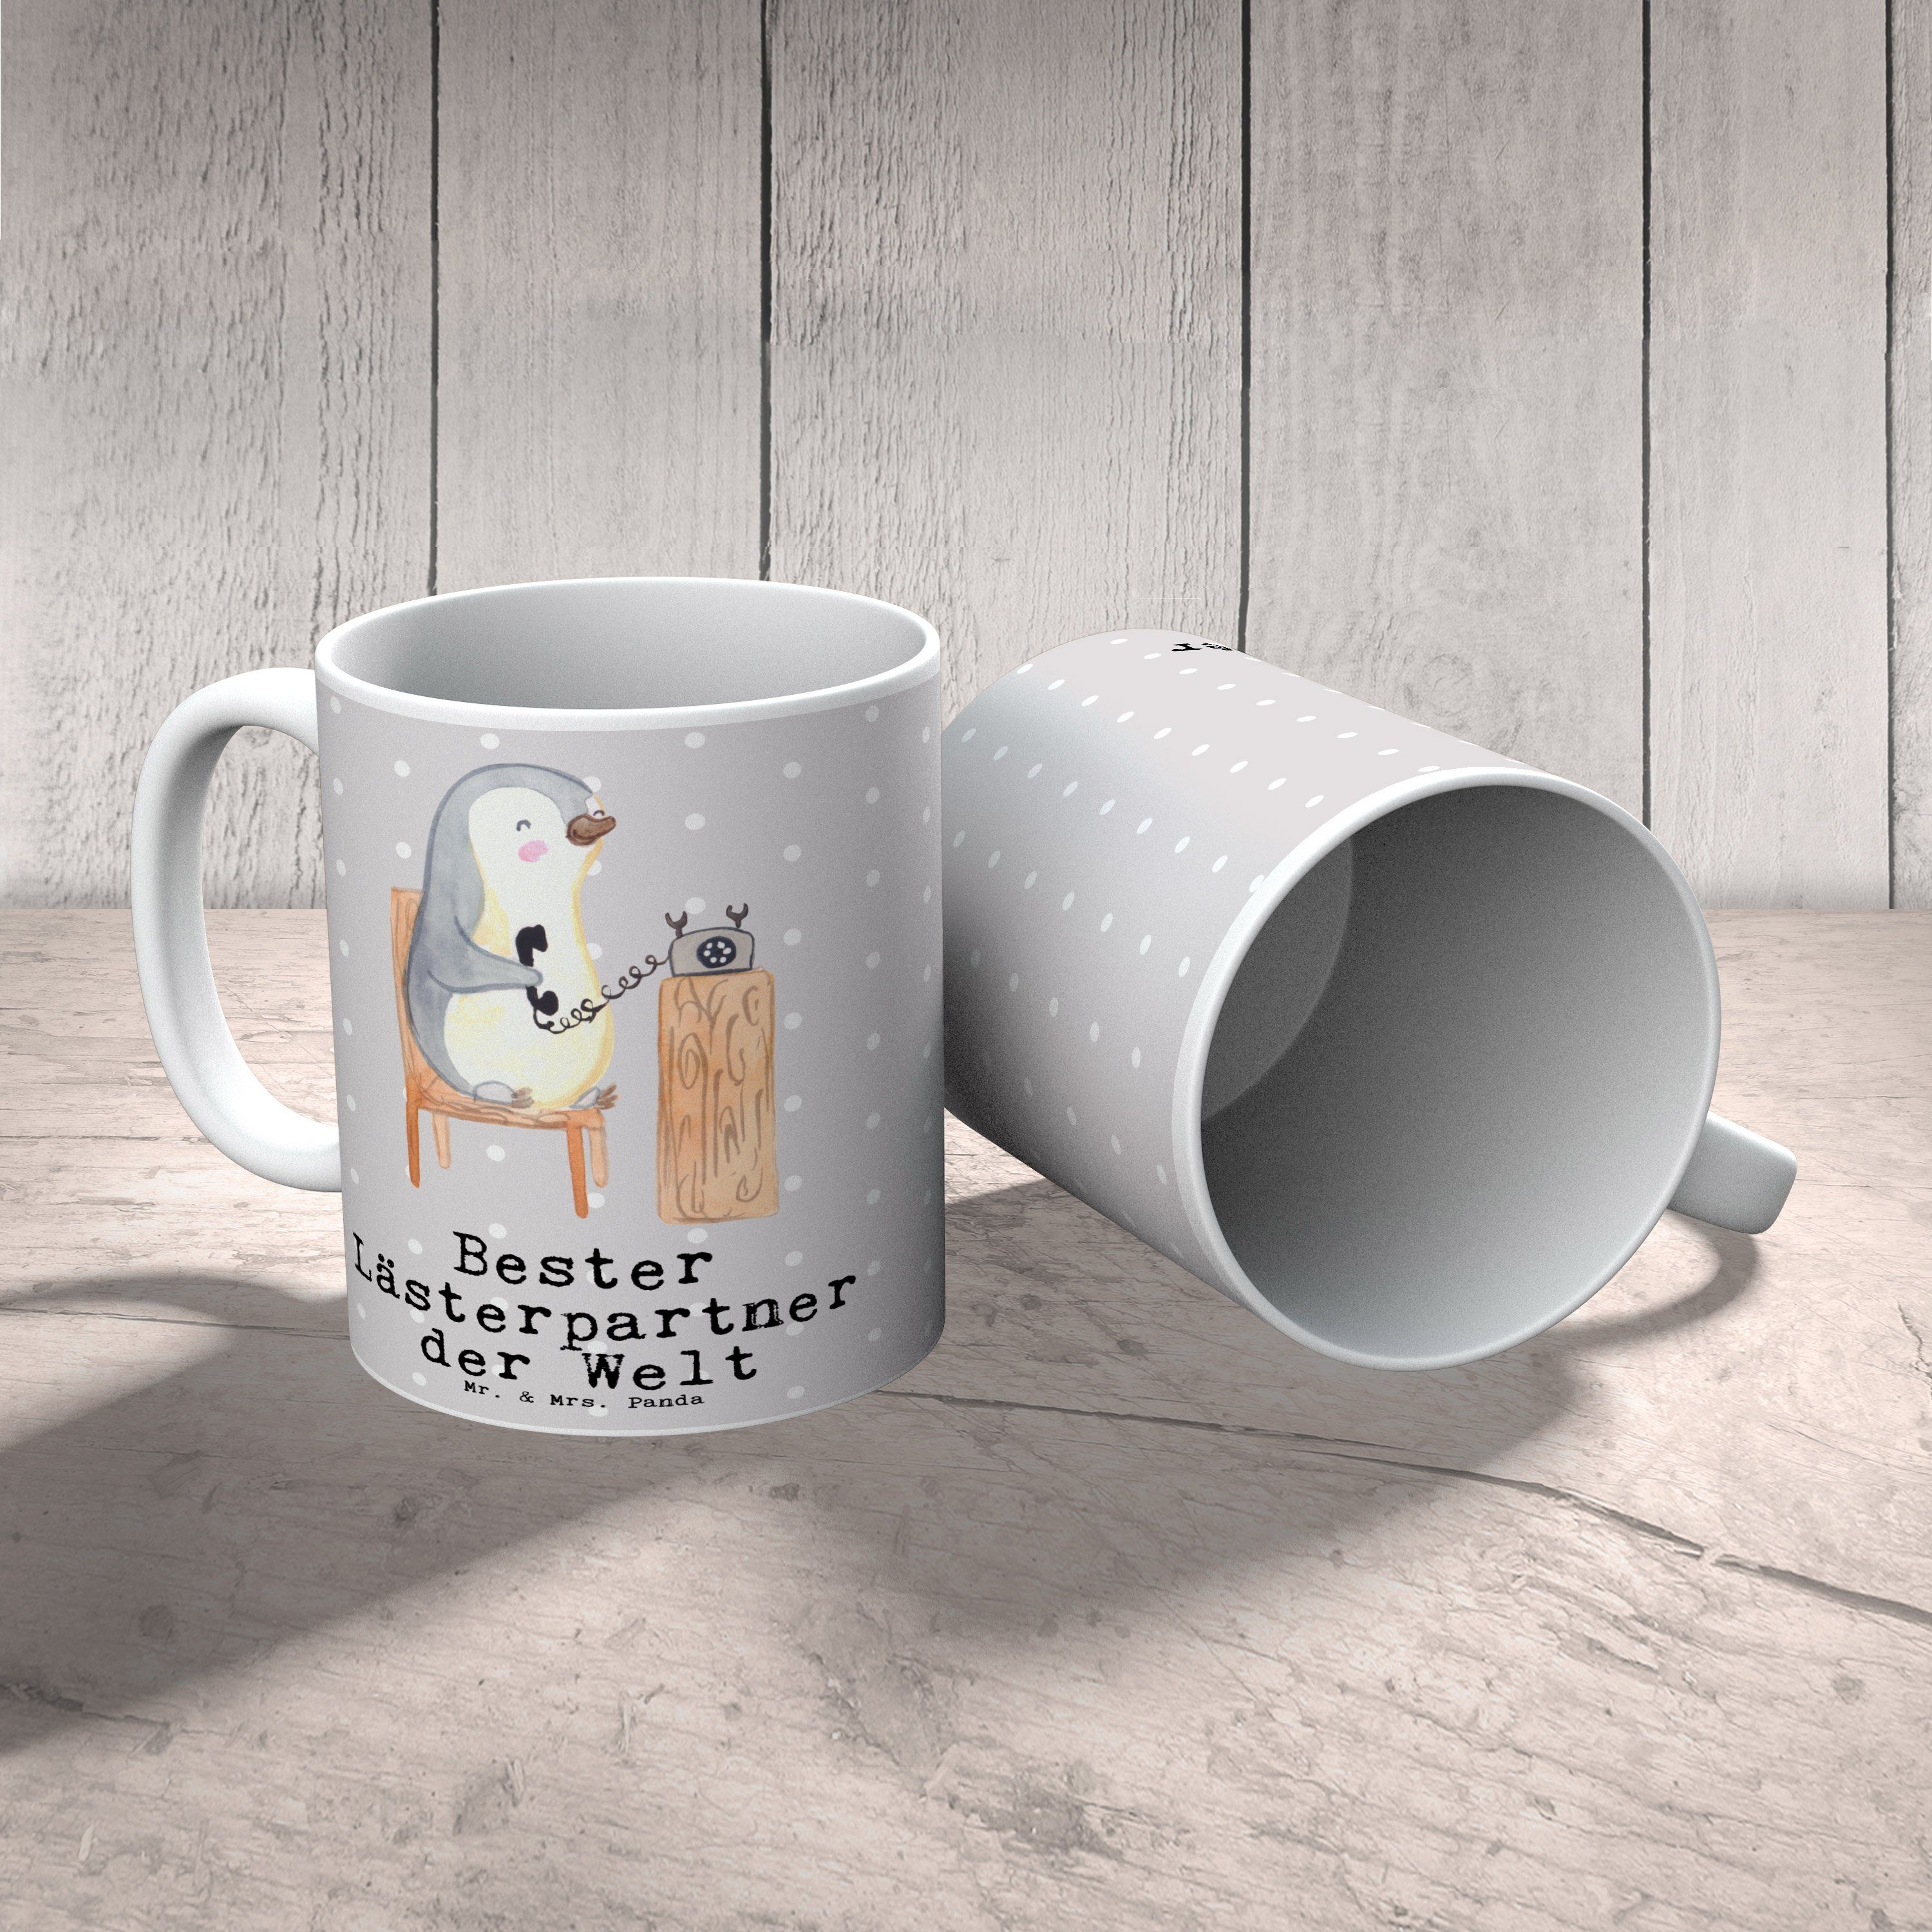 Mr. & Mrs. Panda Tasse Pinguin Bester Lästerpartner der Welt - Grau Pastell - Geschenk, Kaff, Keramik